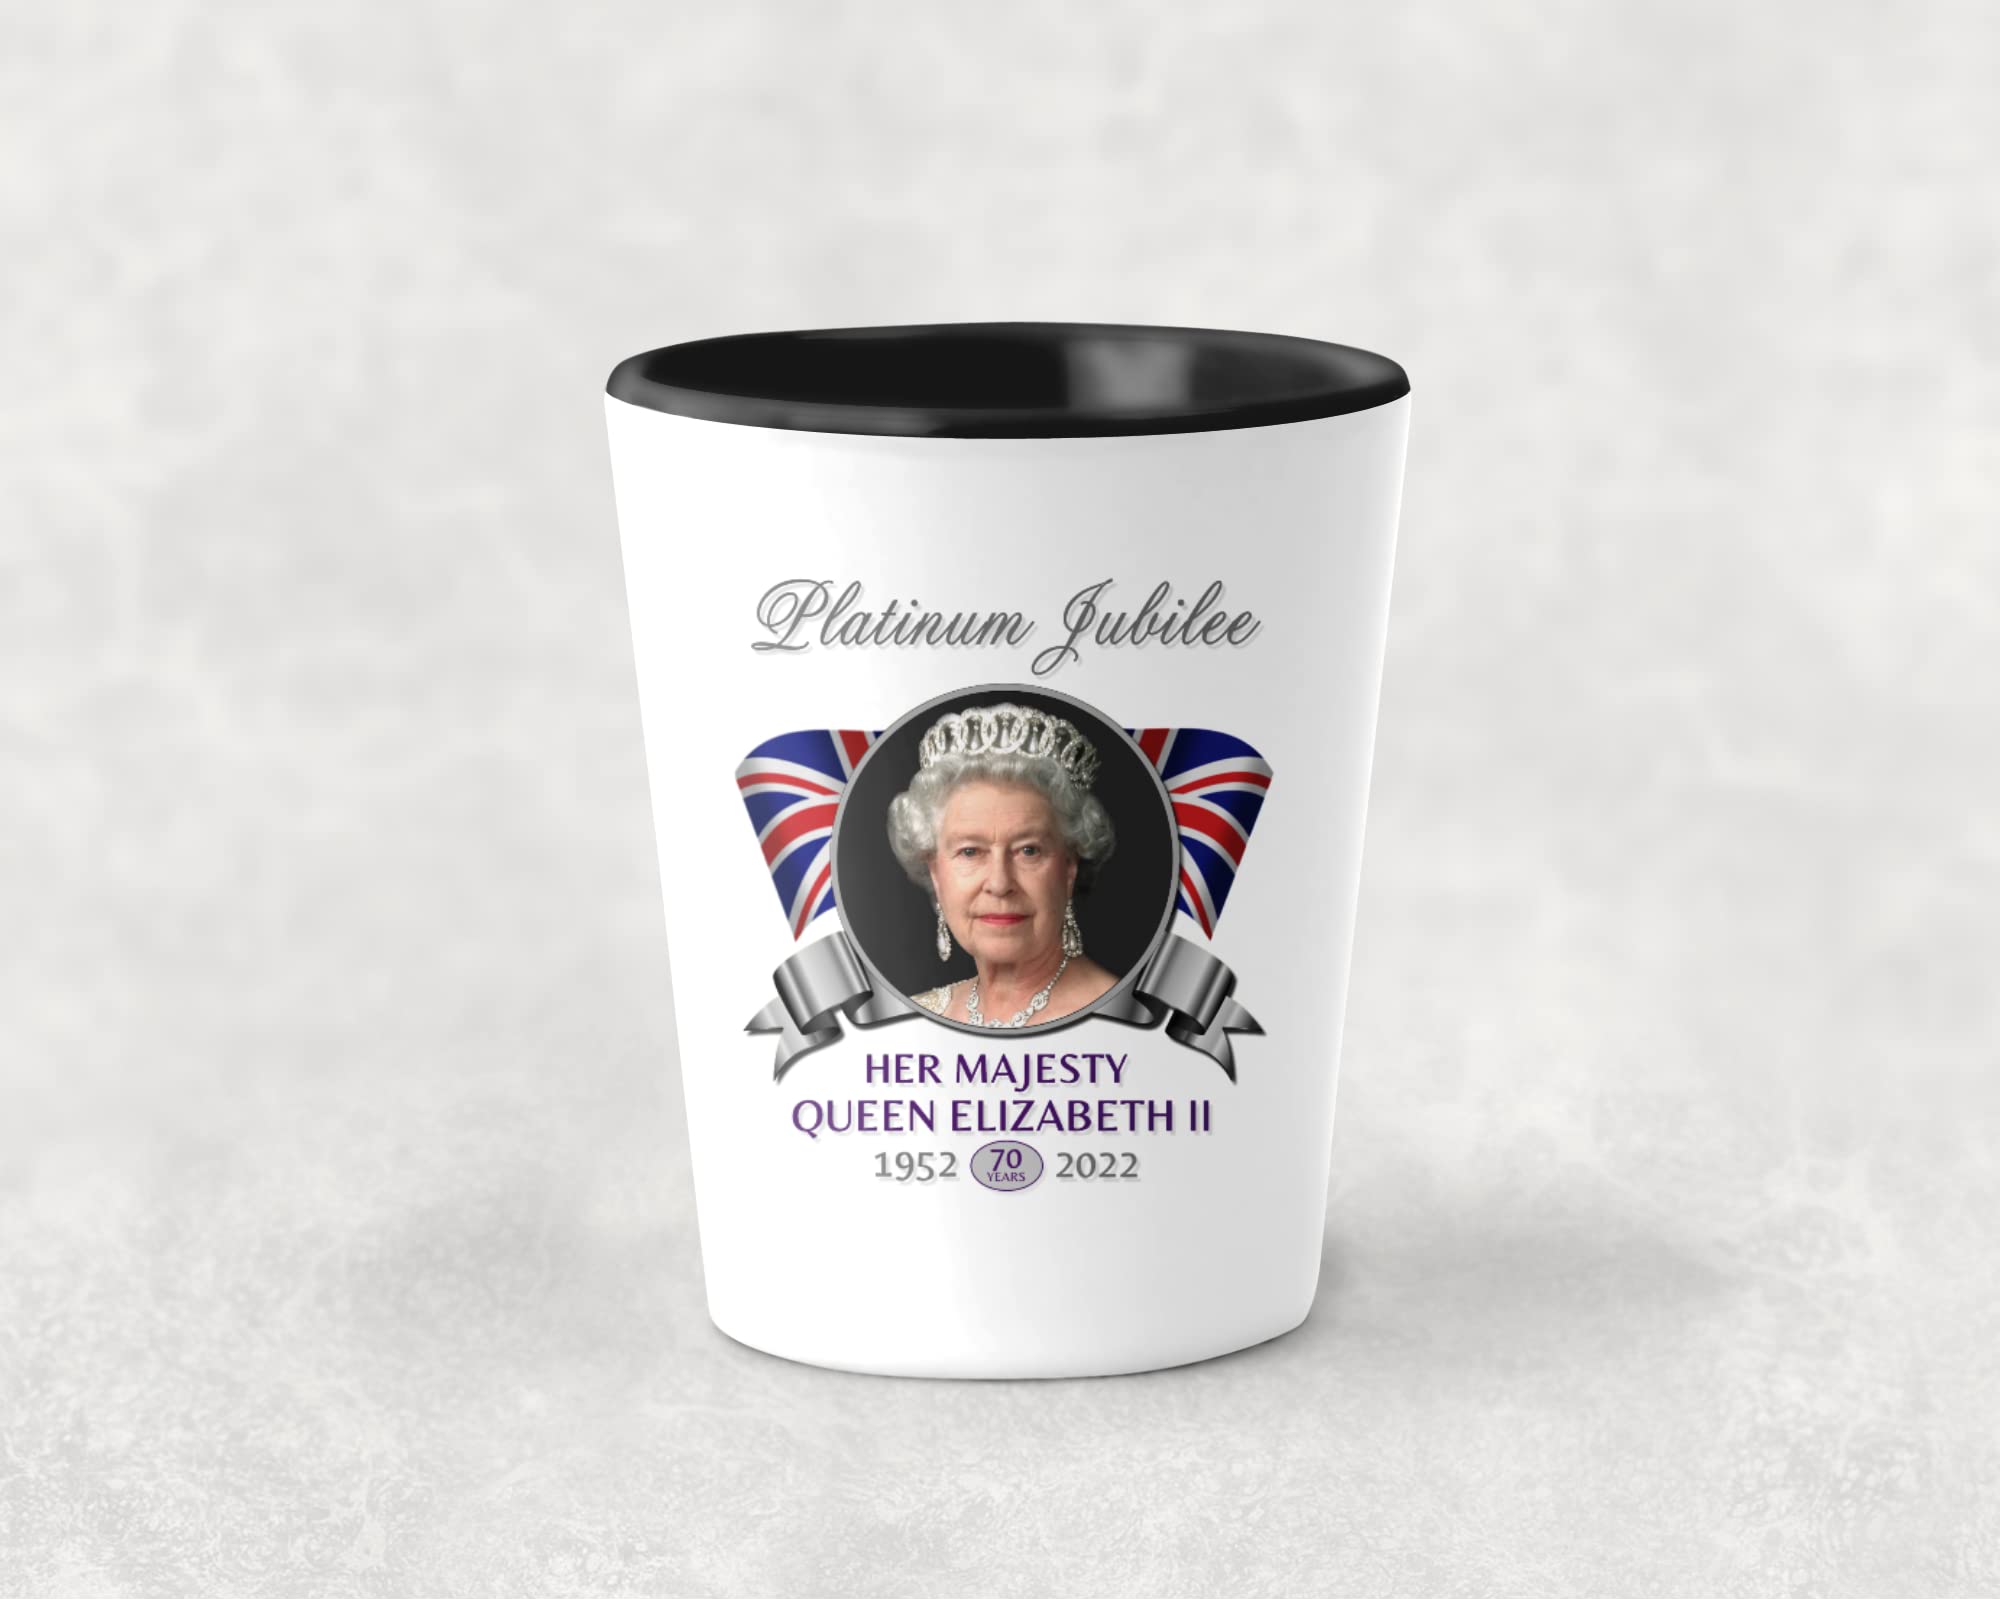 Cyber Hutt West Queen Elizabeth II Platinum Jubilee Shot Glass Commemorating 70 Years